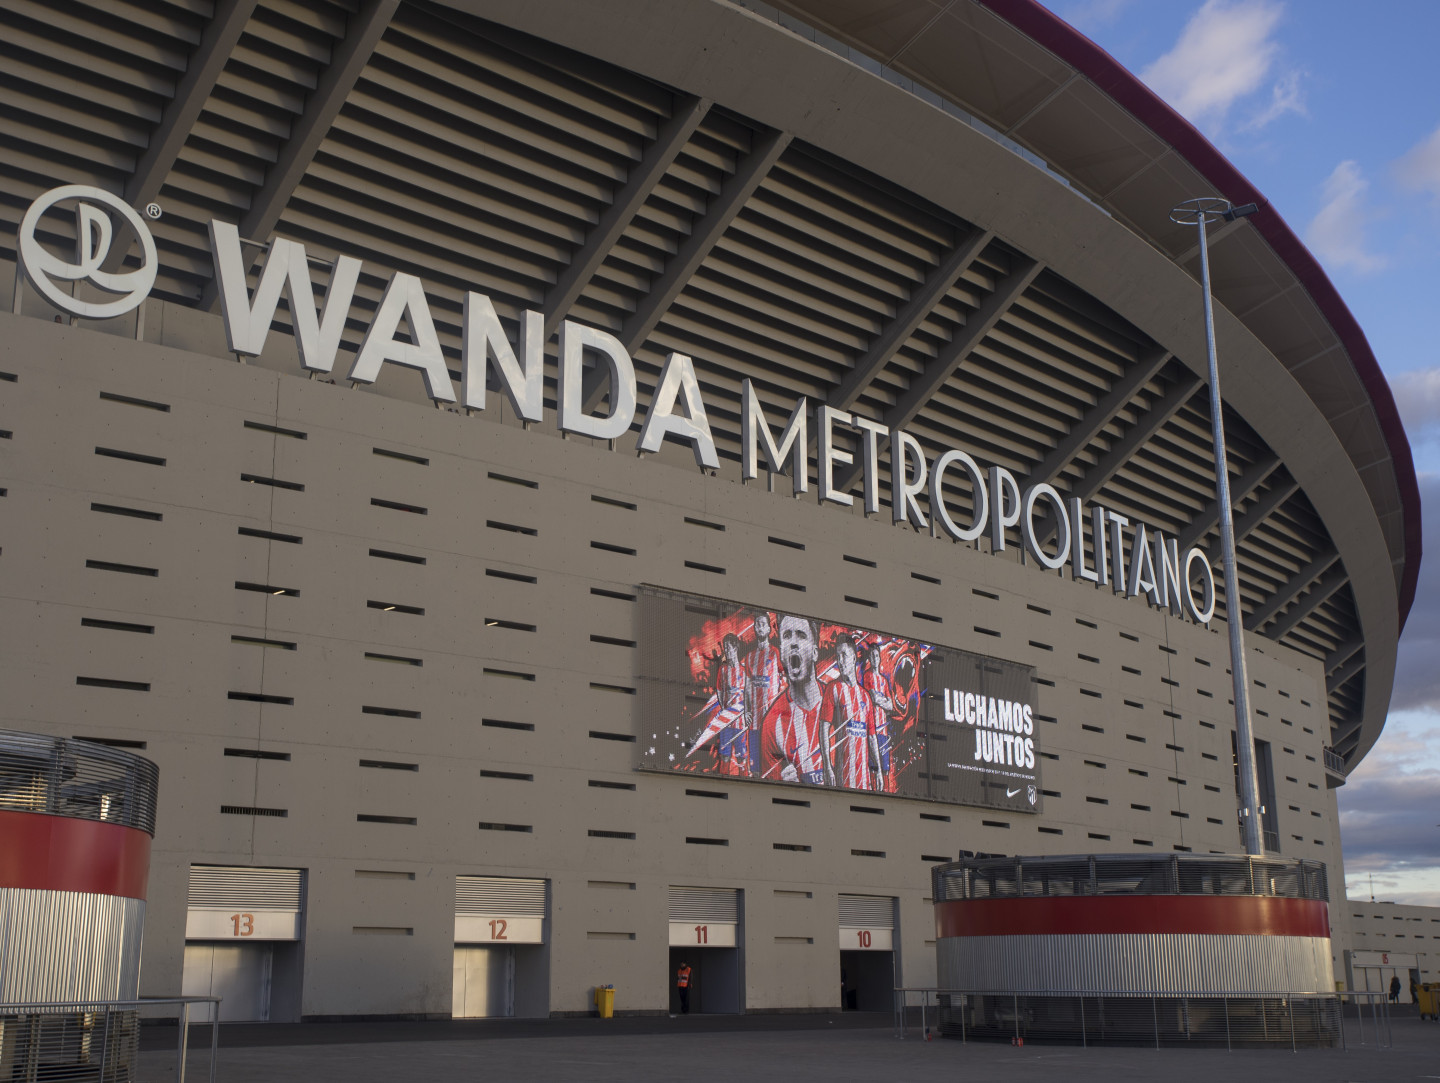 Madrid: Atlético de Madrid Stadium Entry